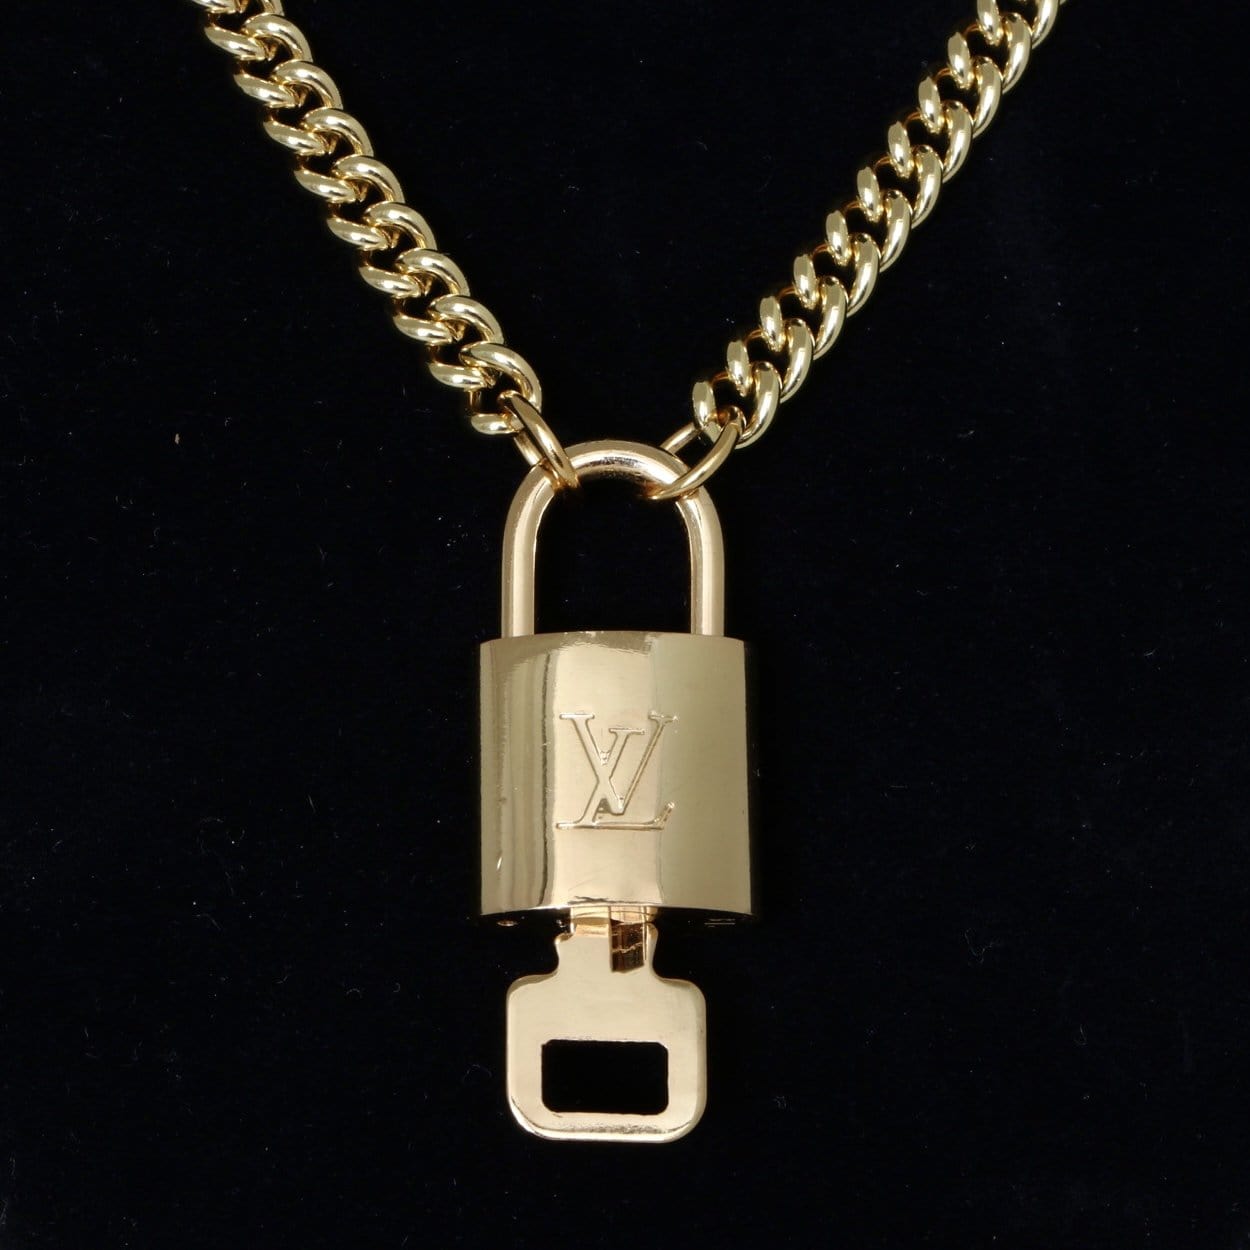 vuitton lock necklace silver